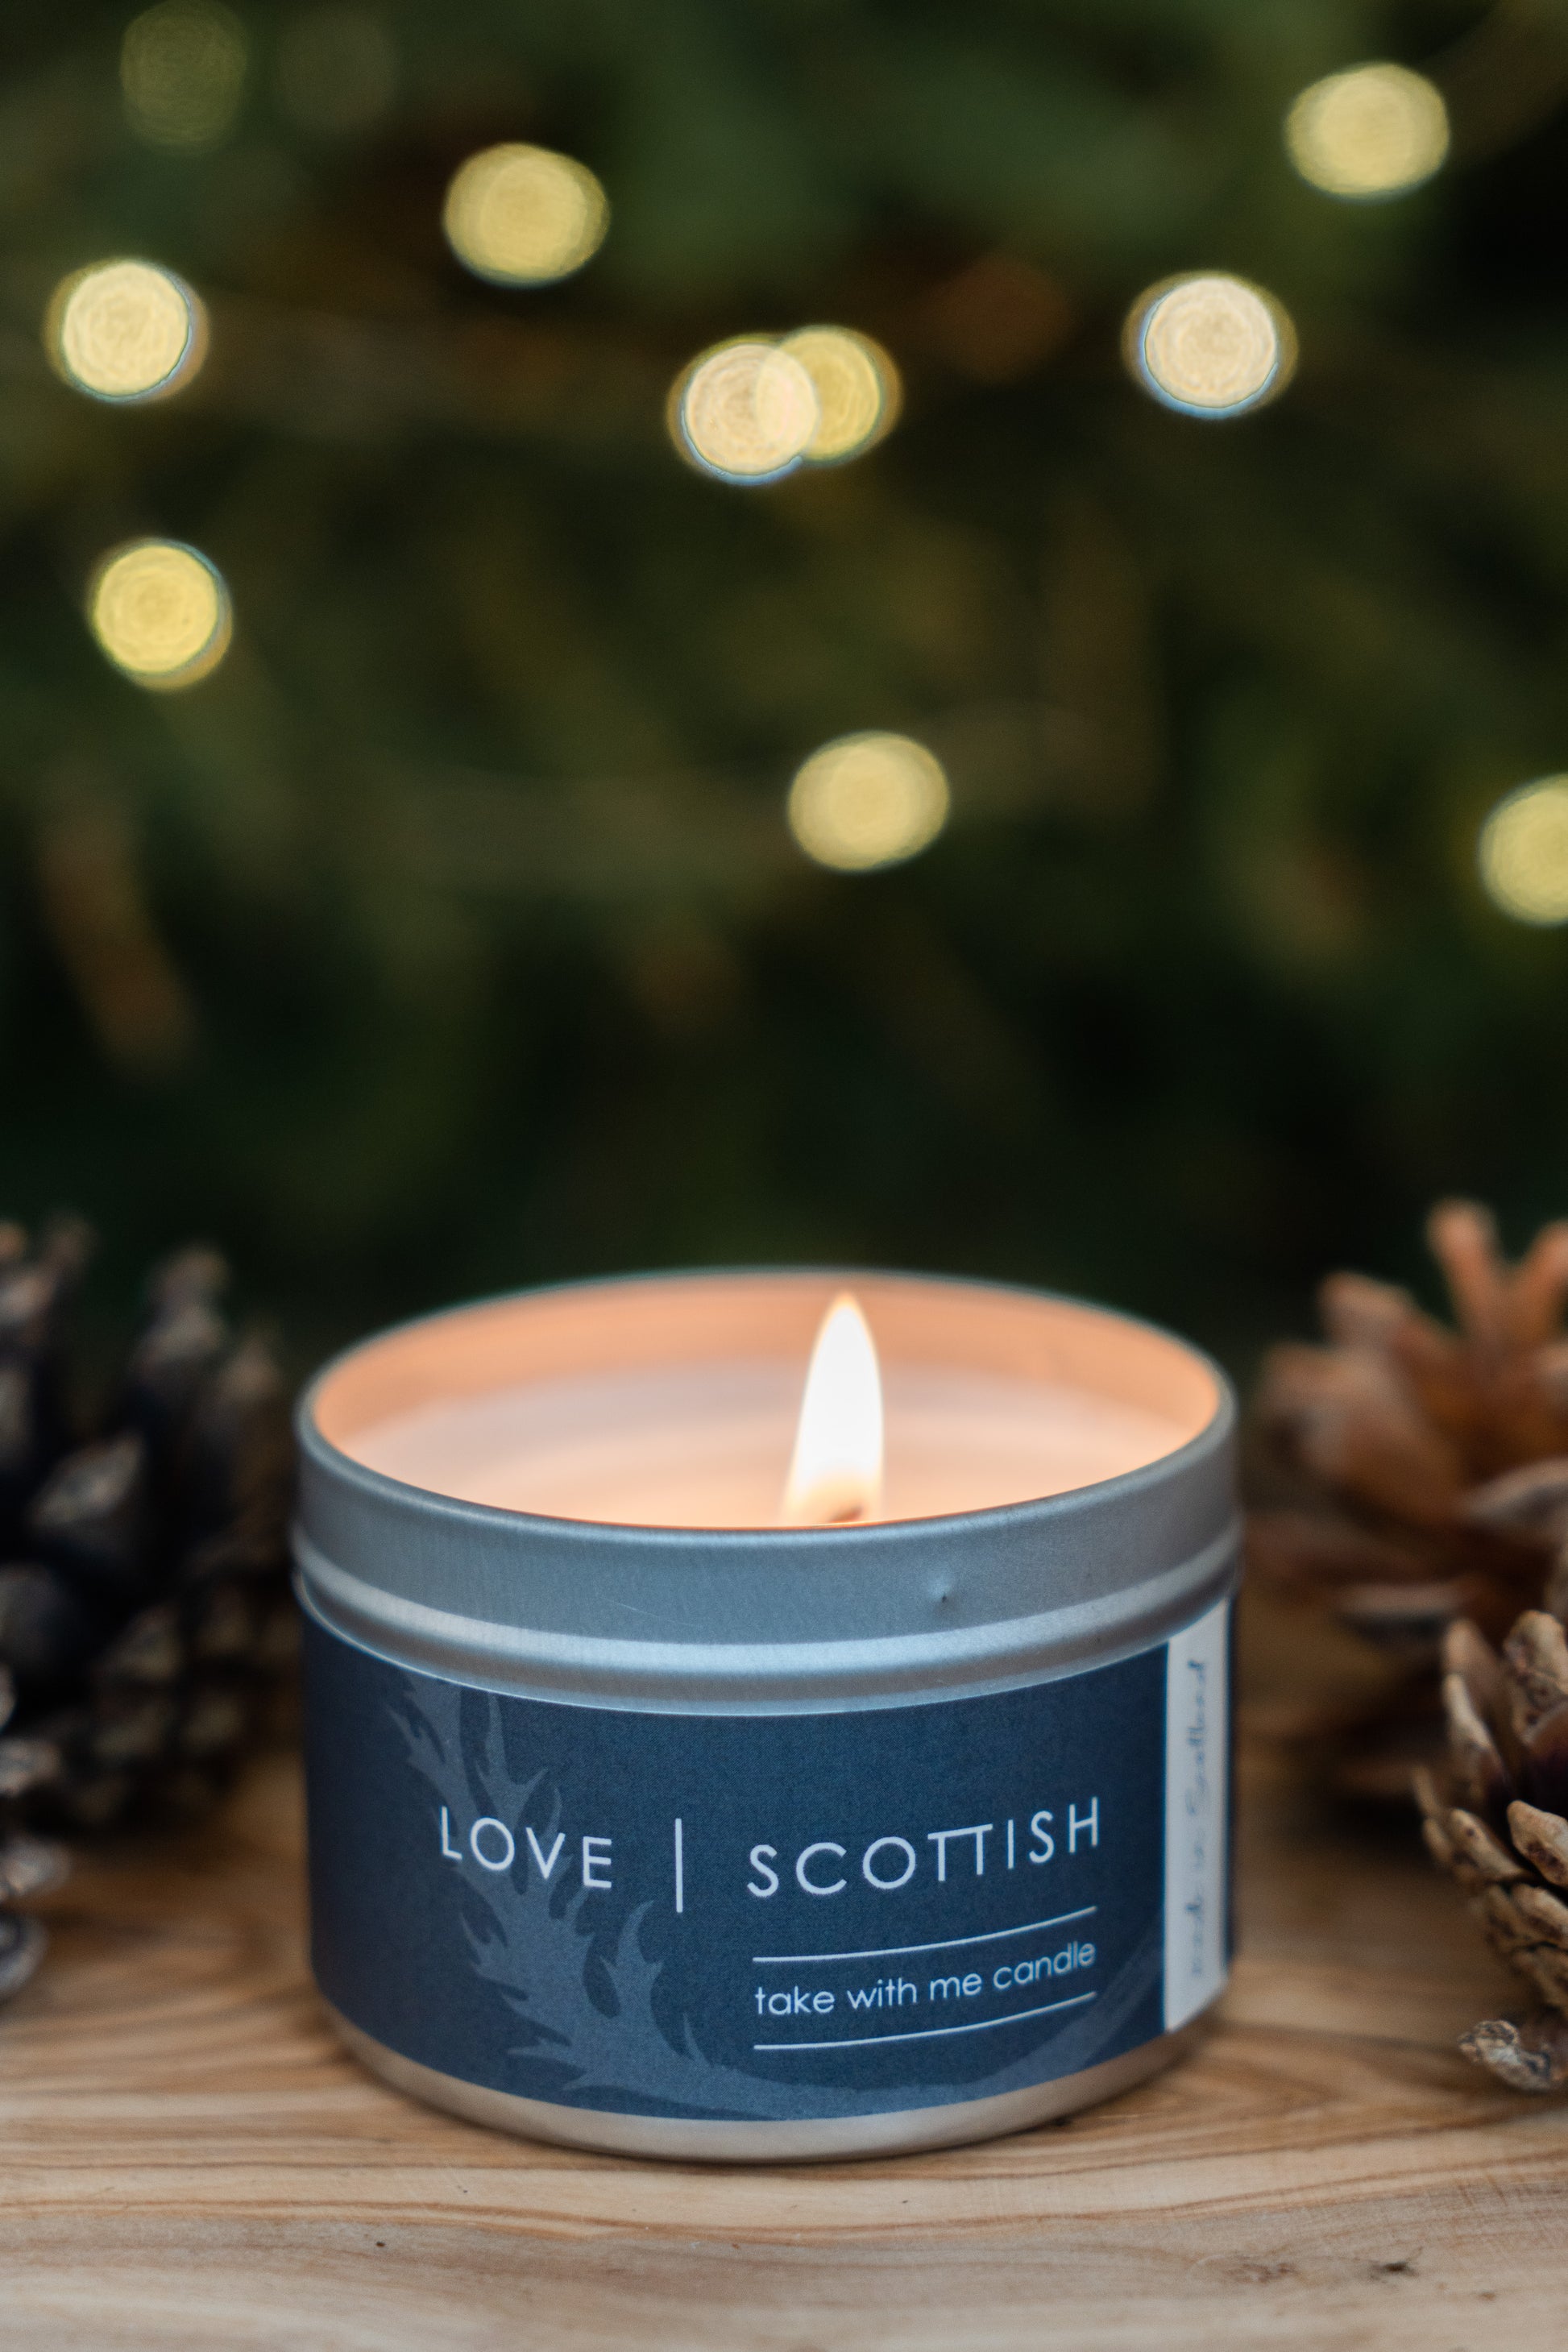 Love Scottish Winter Cranberry Travel Tin. Made in Scotland.